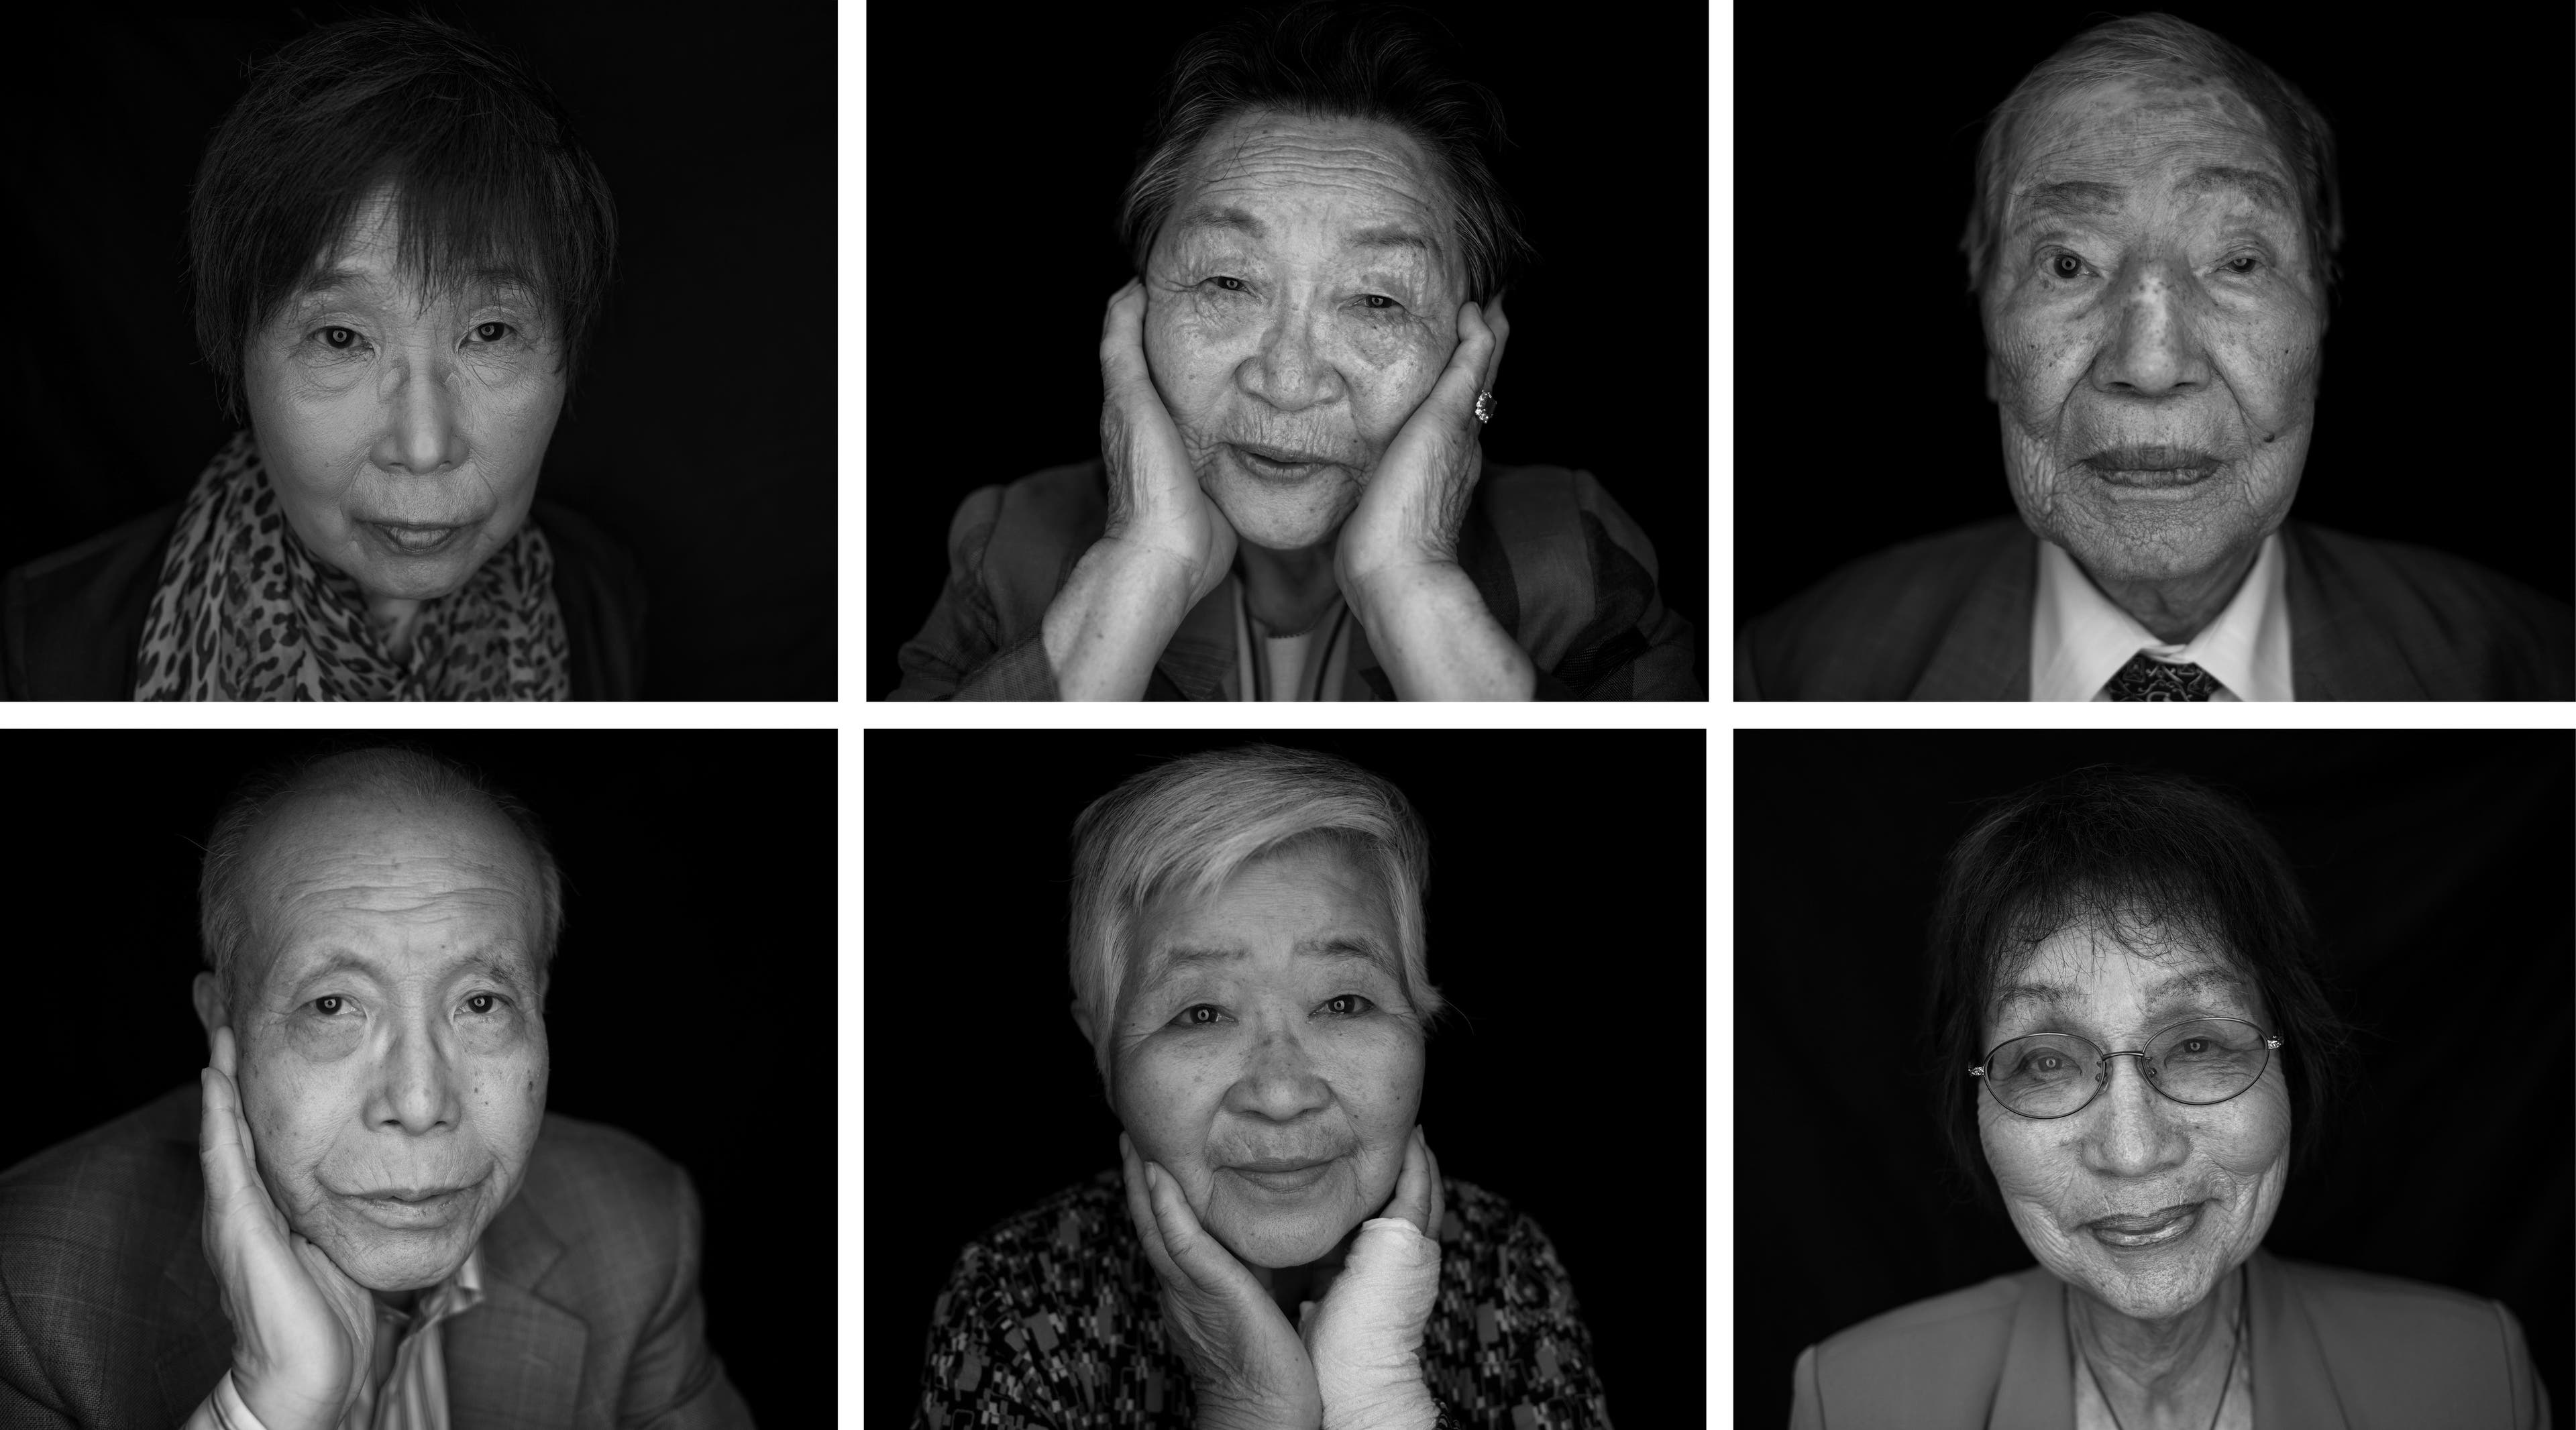 Portraits taken on May 25 and 26, 2016 of survivors of the 1945 atomic bombing of Hiroshima: (top L to R) Keiko Ogura, Park Nam-Joo, Sunao Tsuboi; (bottom L to R) Shigeaki Mori, Misako Katani and Emiko Okada in Hiroshima